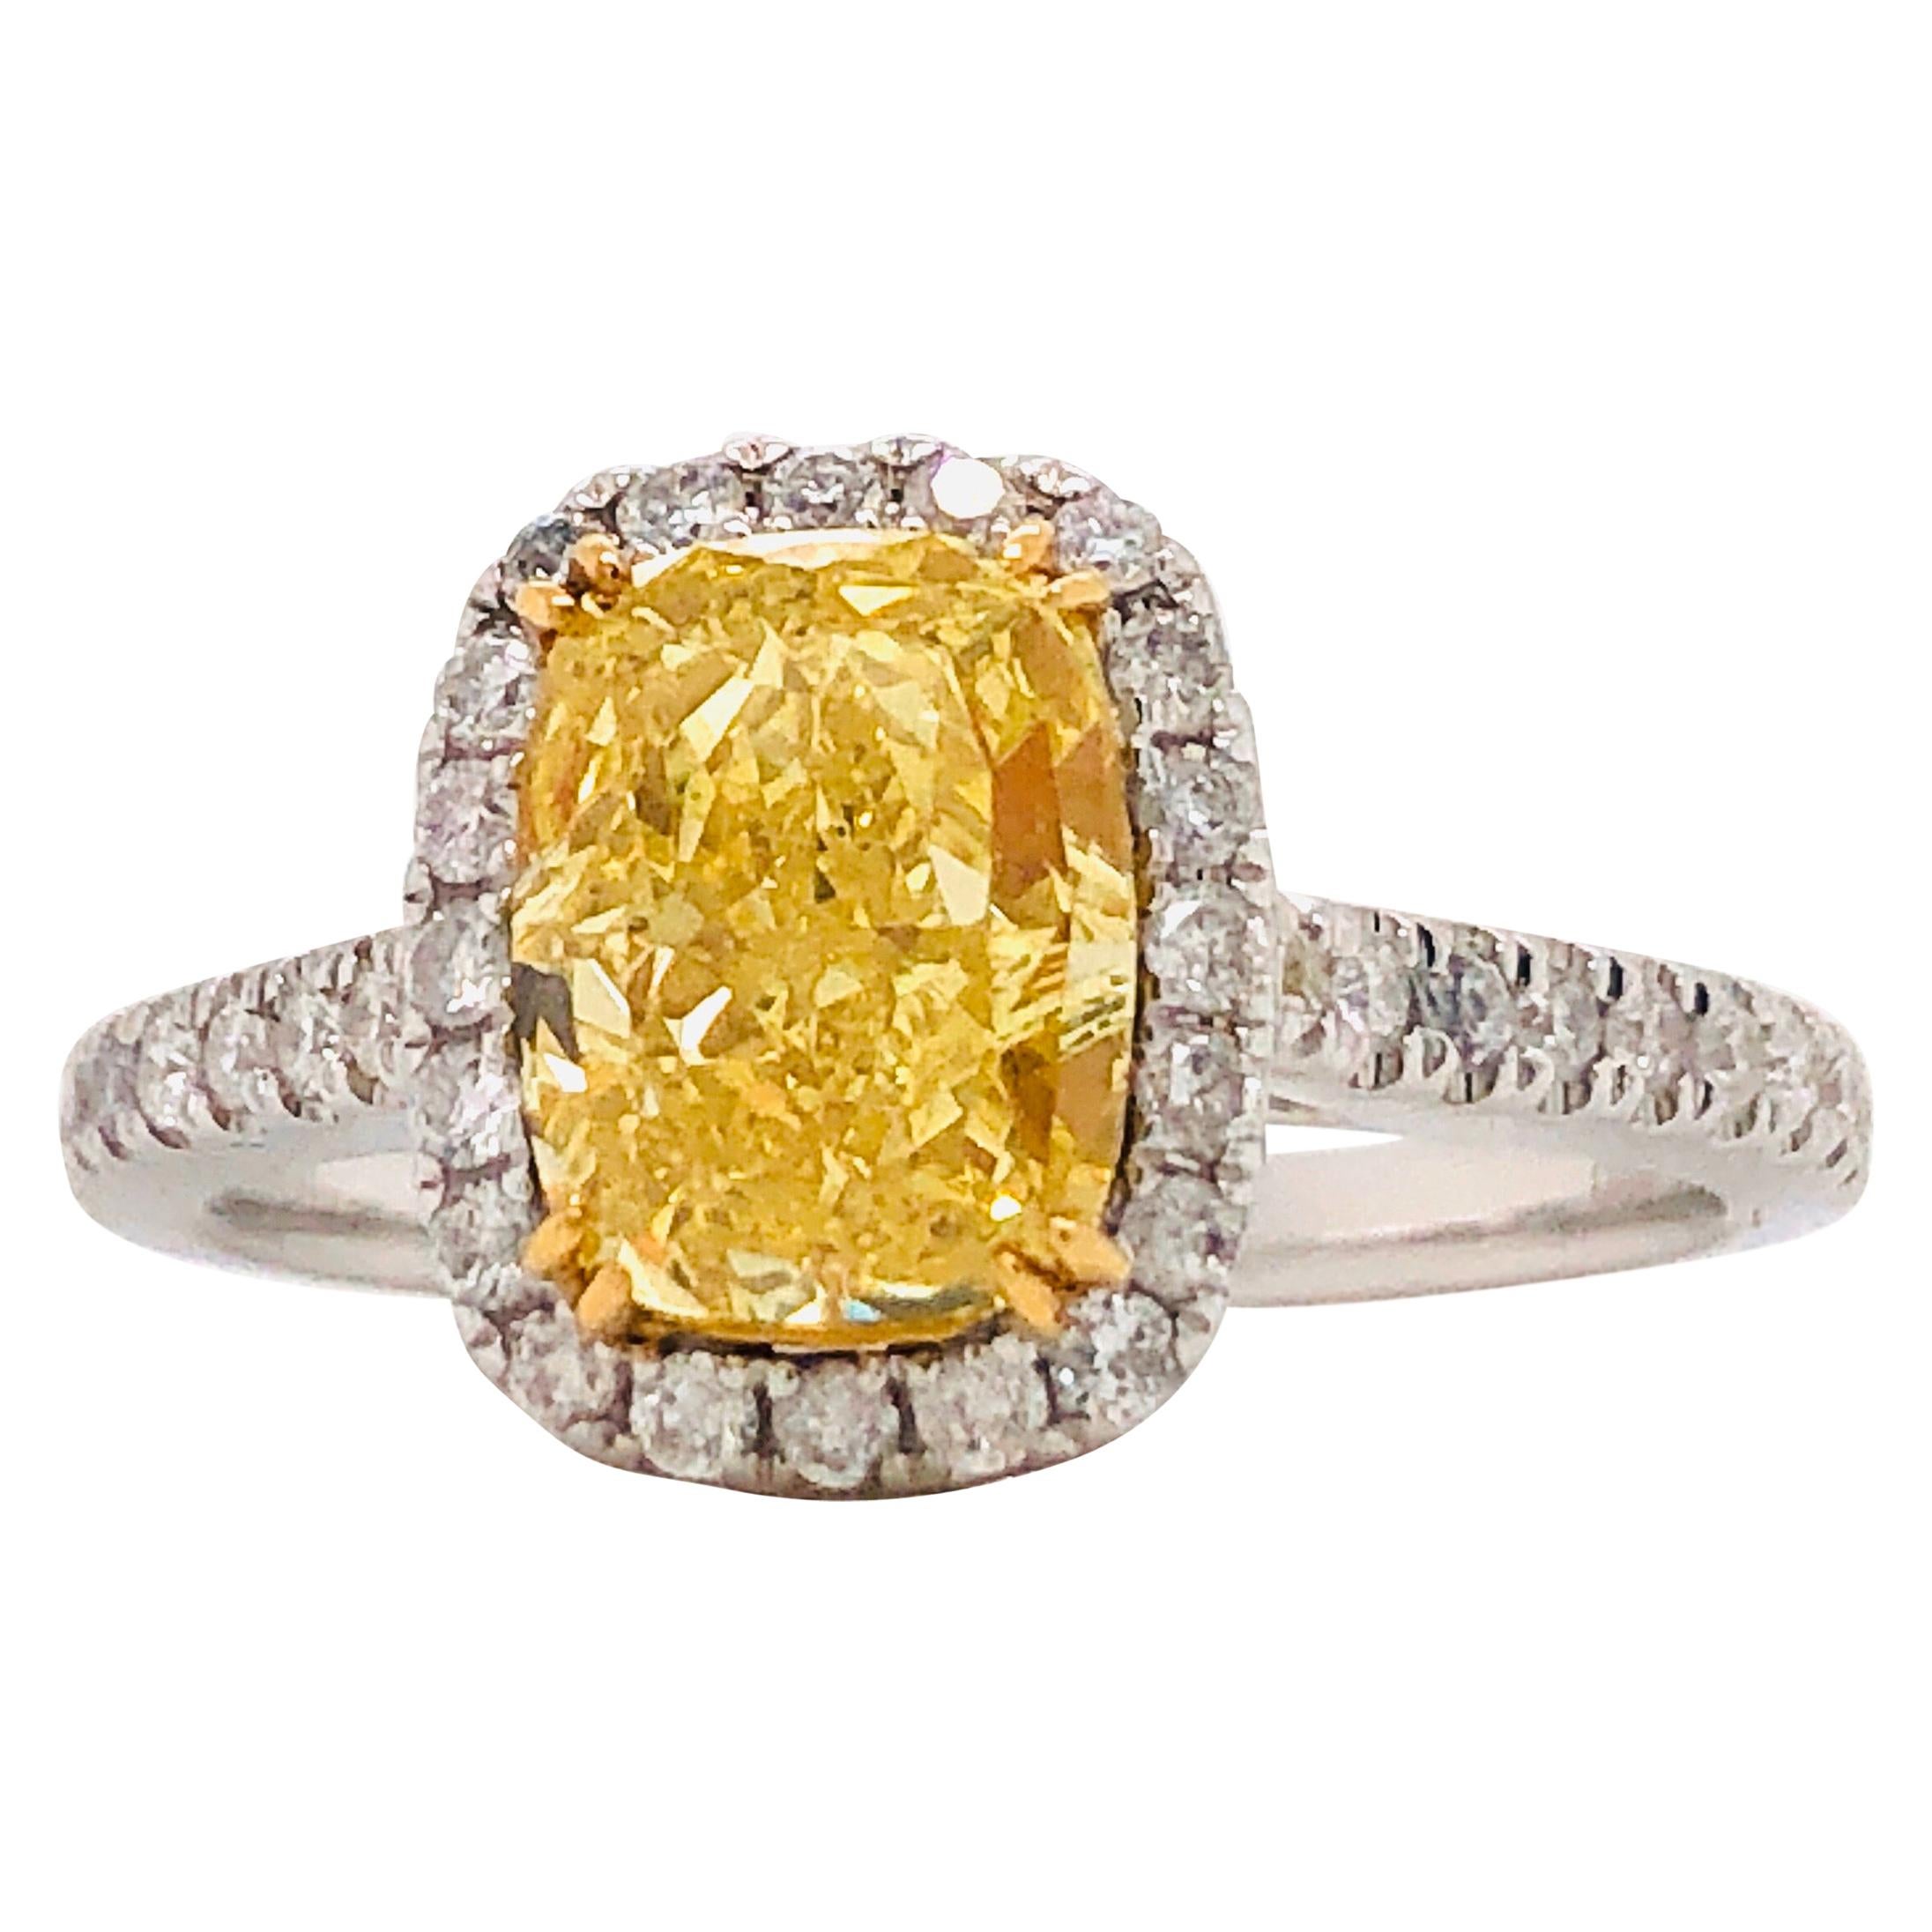 Emilio Jewelry 2.02 Carat GIA Certified Fancy Intense Yellow Diamond Ring